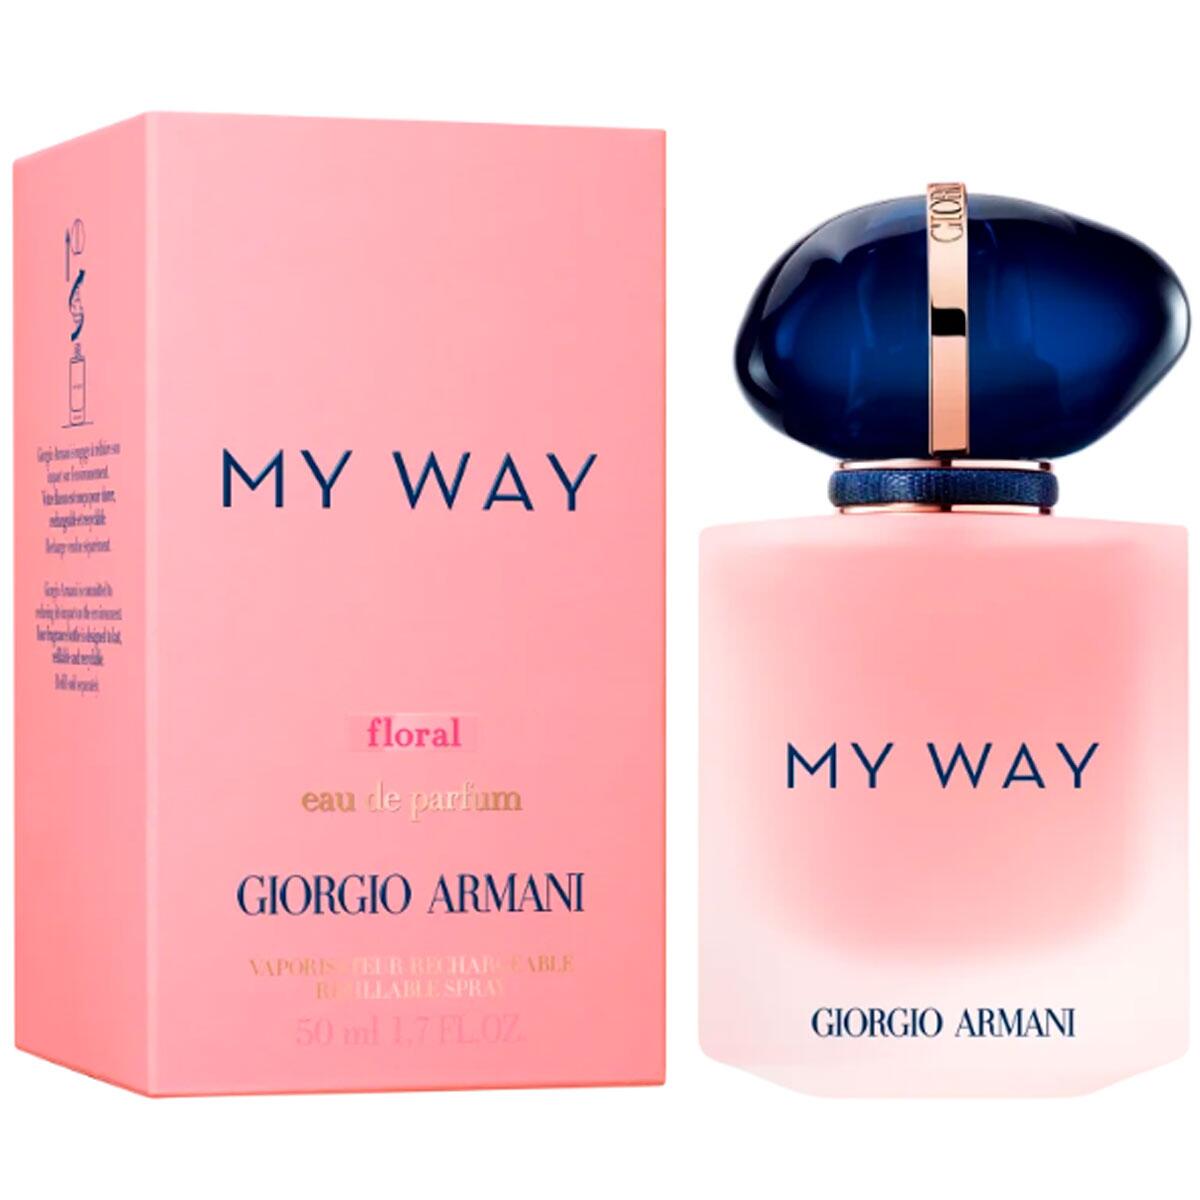 Comprar Perfume Feminino My Way Floral Giorgio Armani Eau de Parfum 50ml -  a partir de R$574,75 - Boutique Dos Perfumes